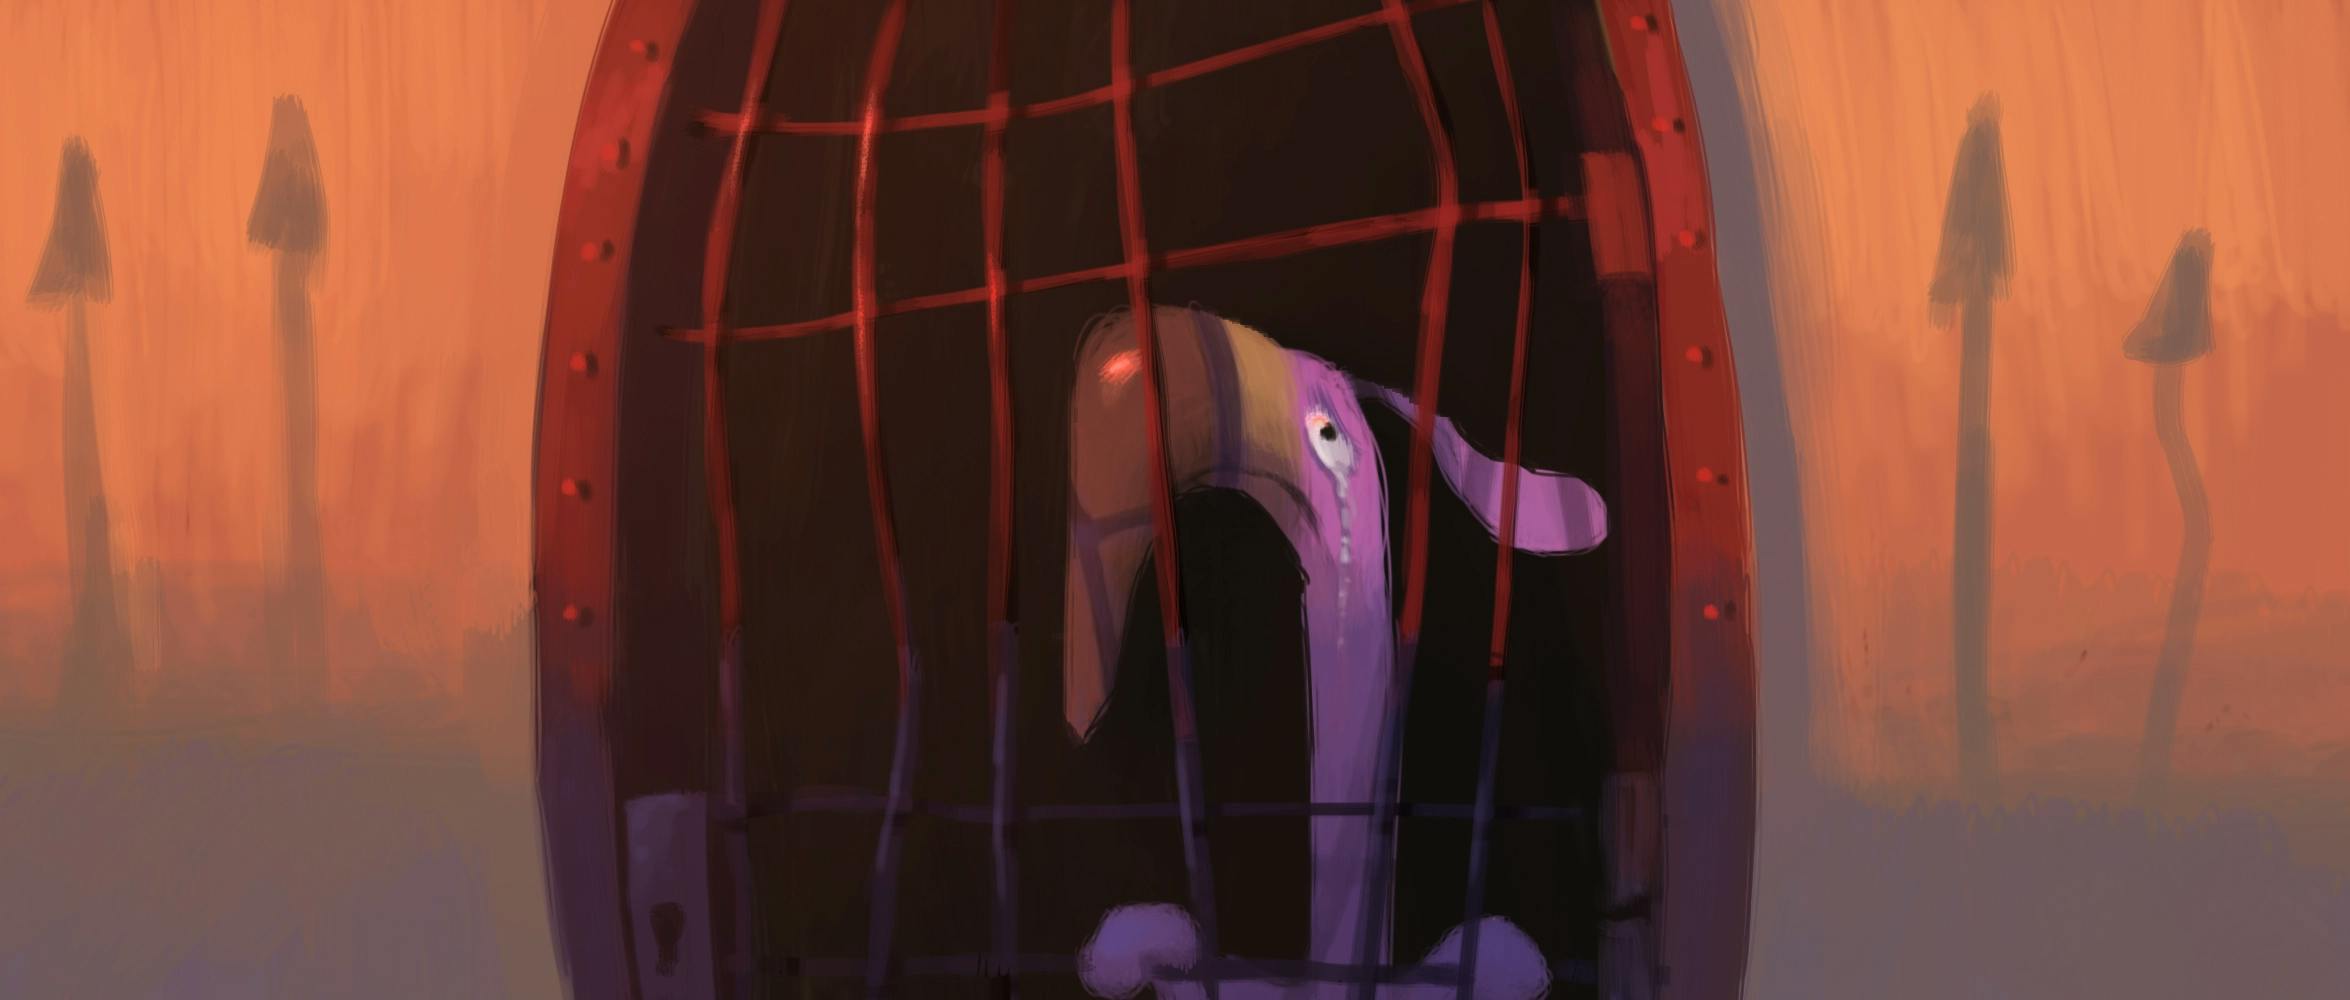 An illustration of a flamingo behind bars